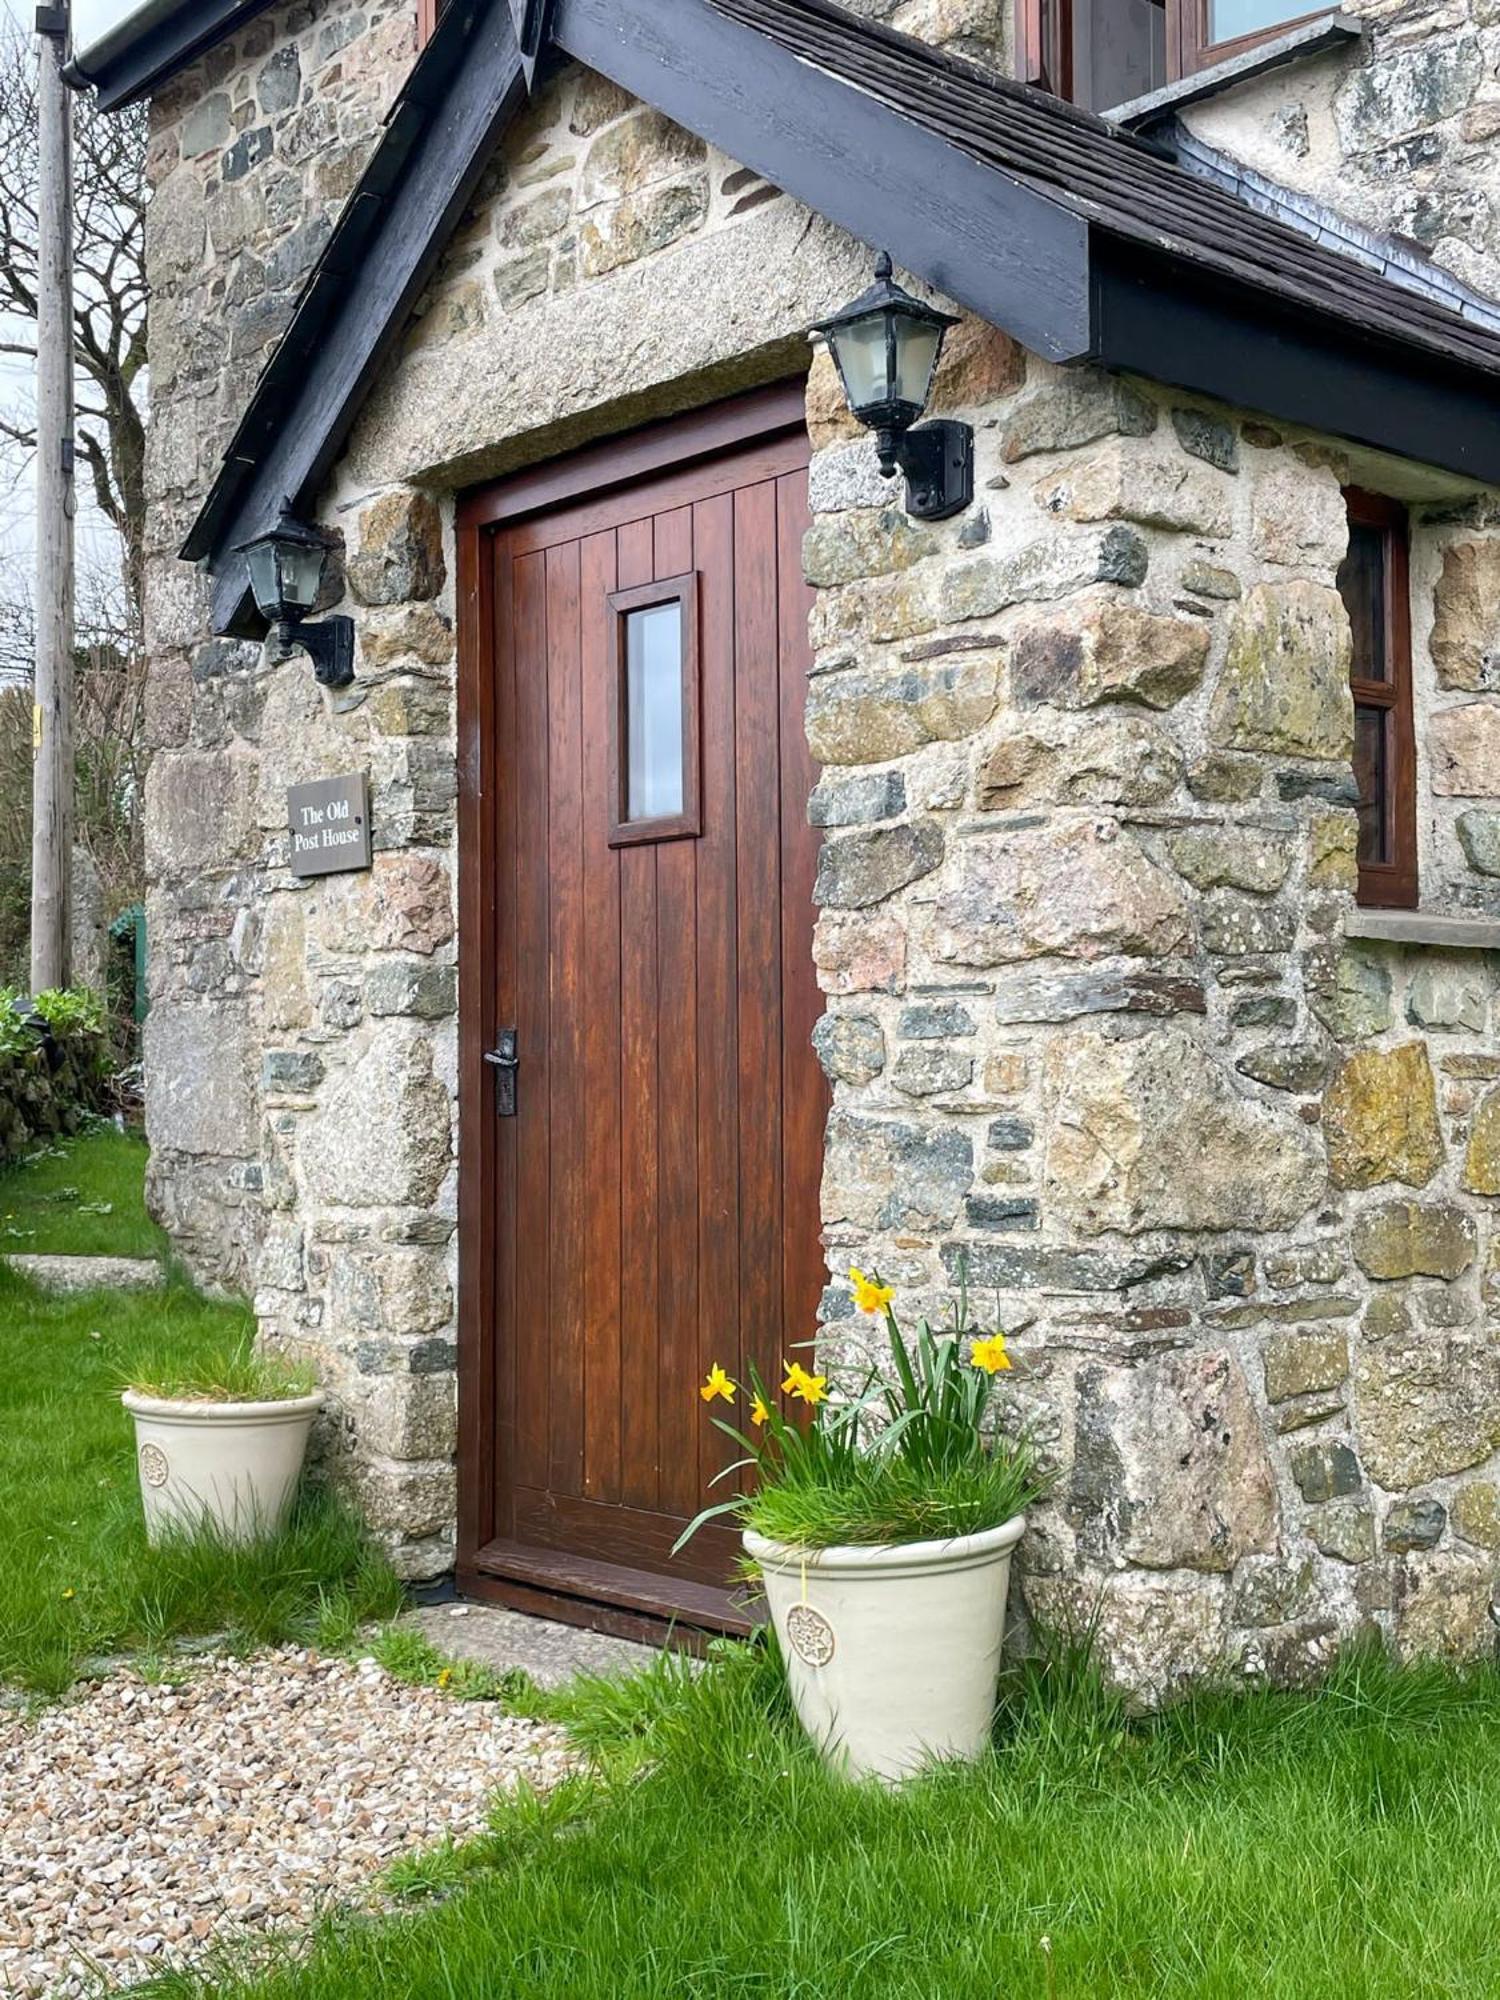 The Old Post House - Historic Dartmoor Home Tavistock  Exterior foto